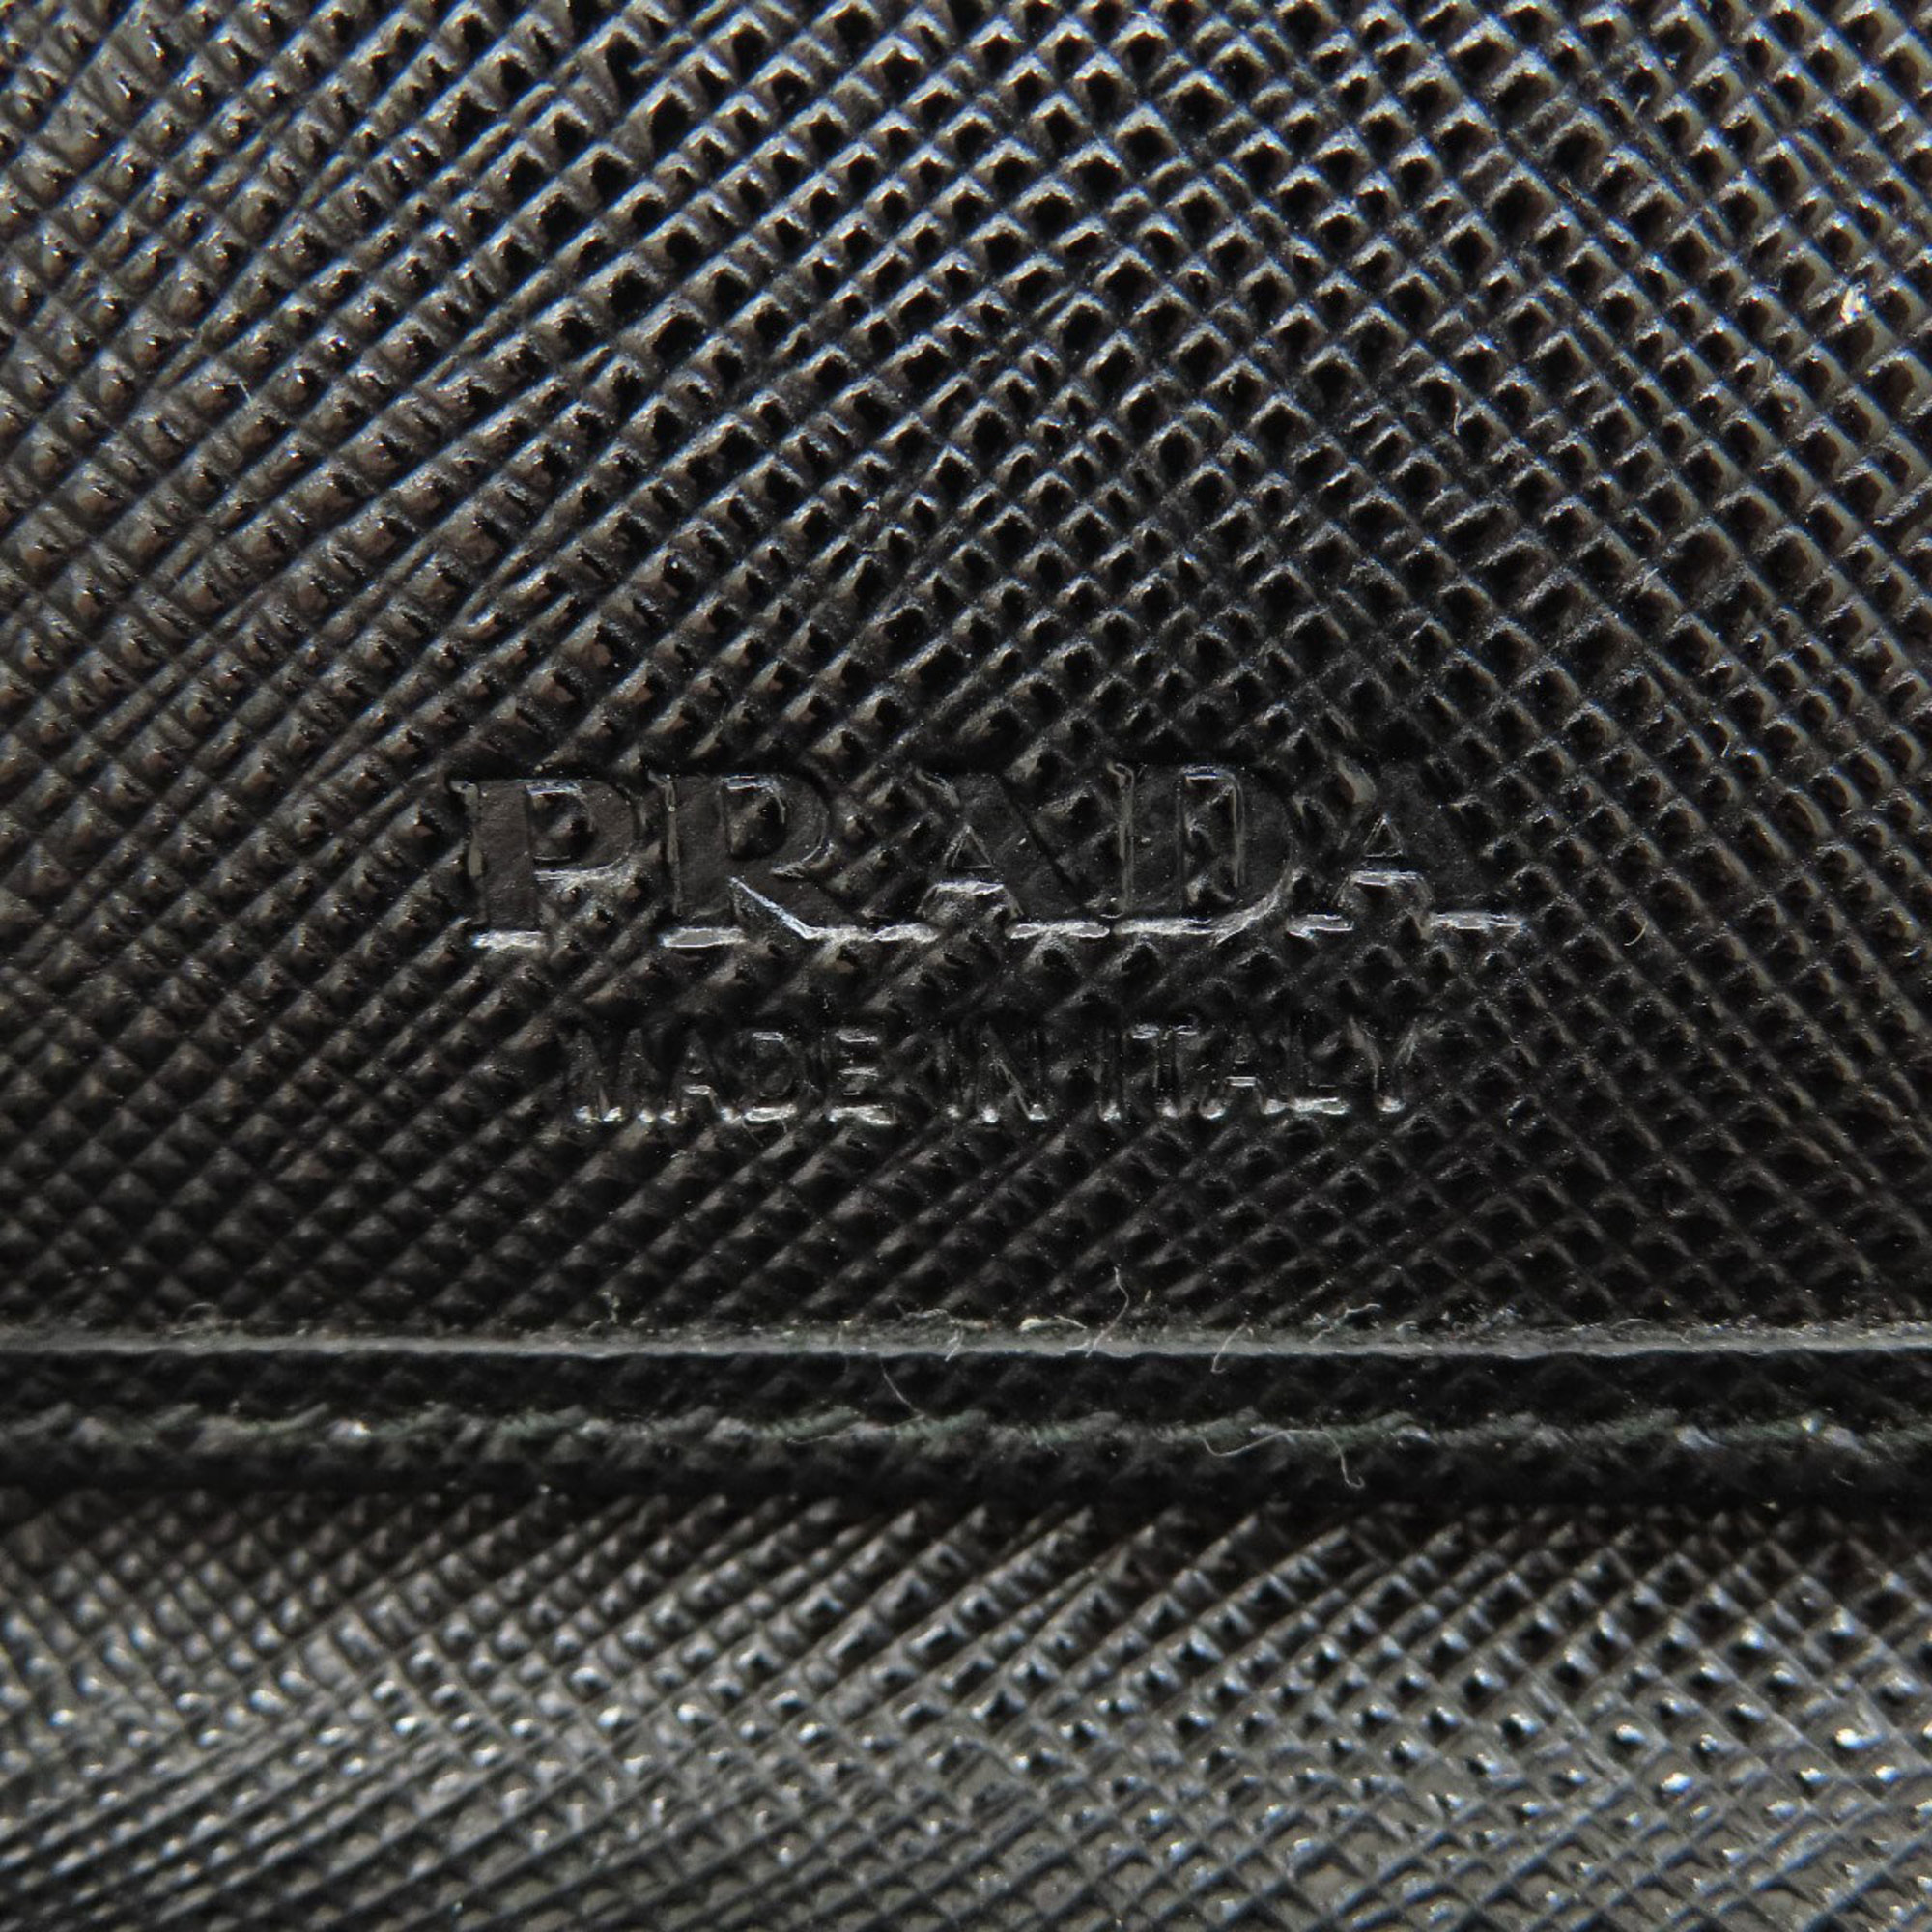 Prada Saffiano Bi-fold Wallet Leather Women's PRADA